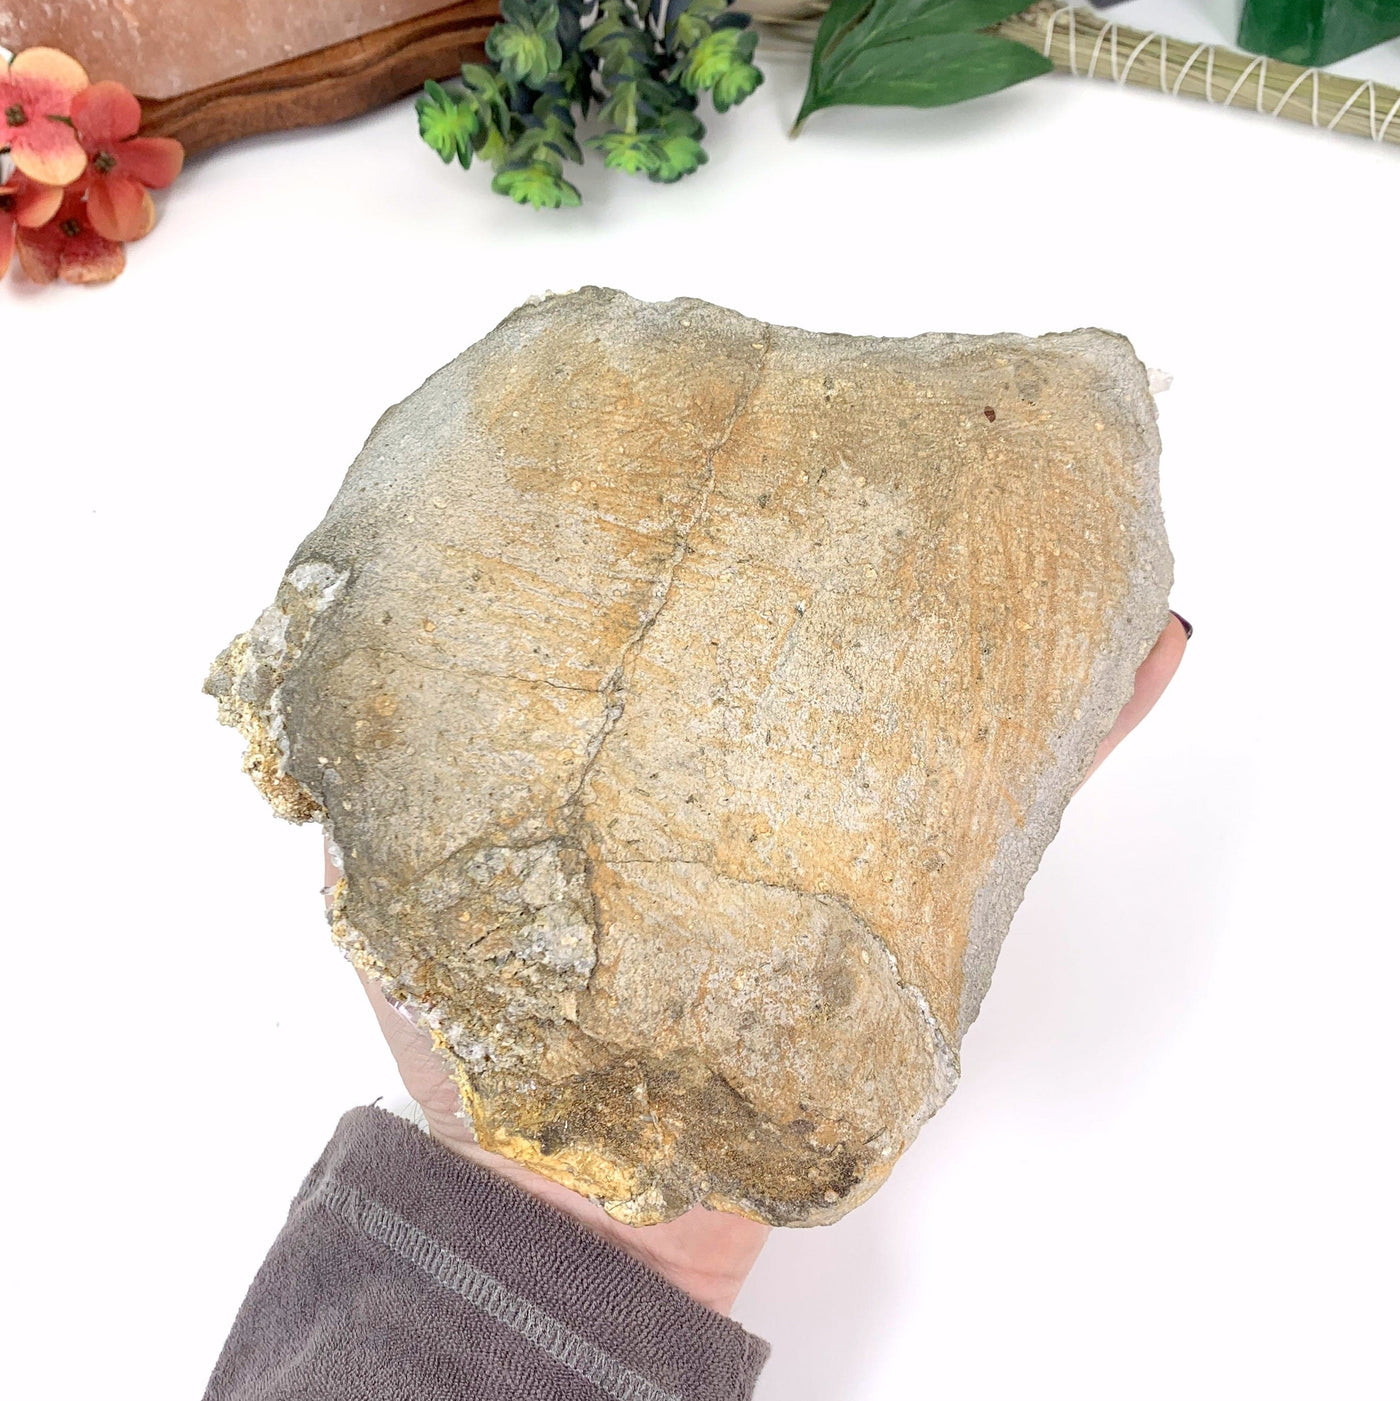 back side of veracruz aemthyst showing a greyish rock